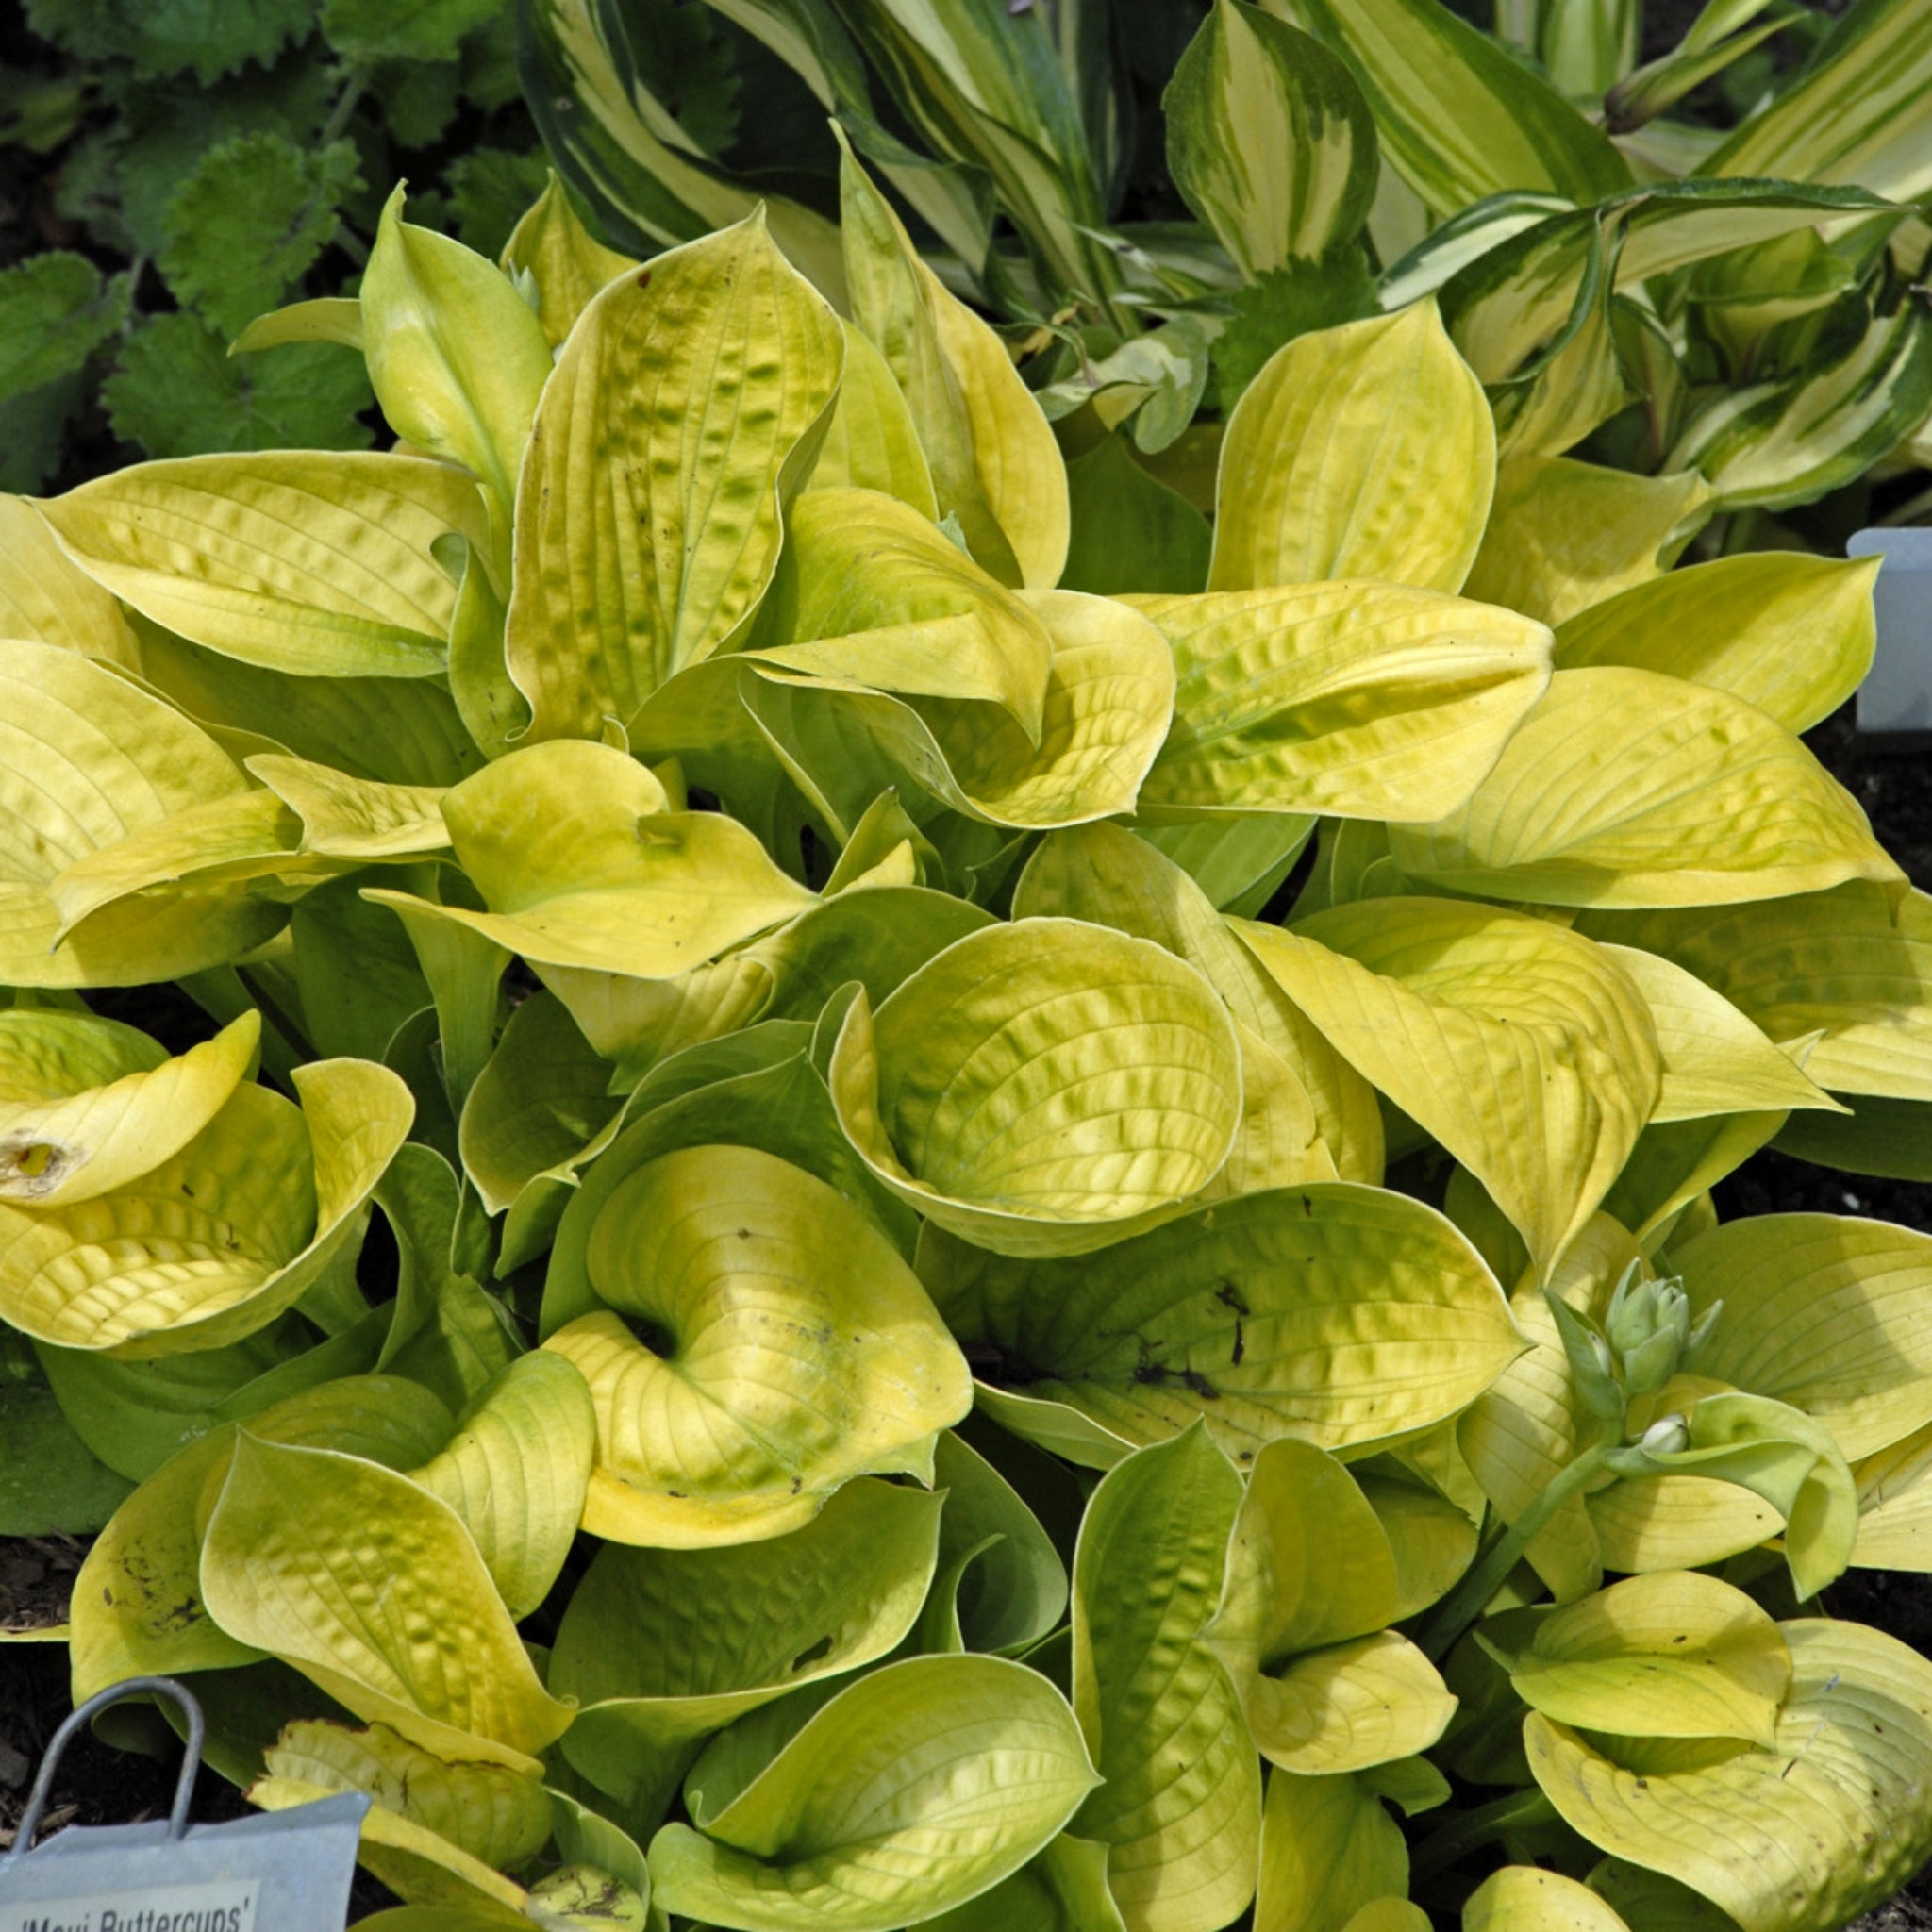 Maui Buttercups Hosta - Shade Perennial Sun Tolerant Hosta Plant – NH Hostas | Multifunktionstücher